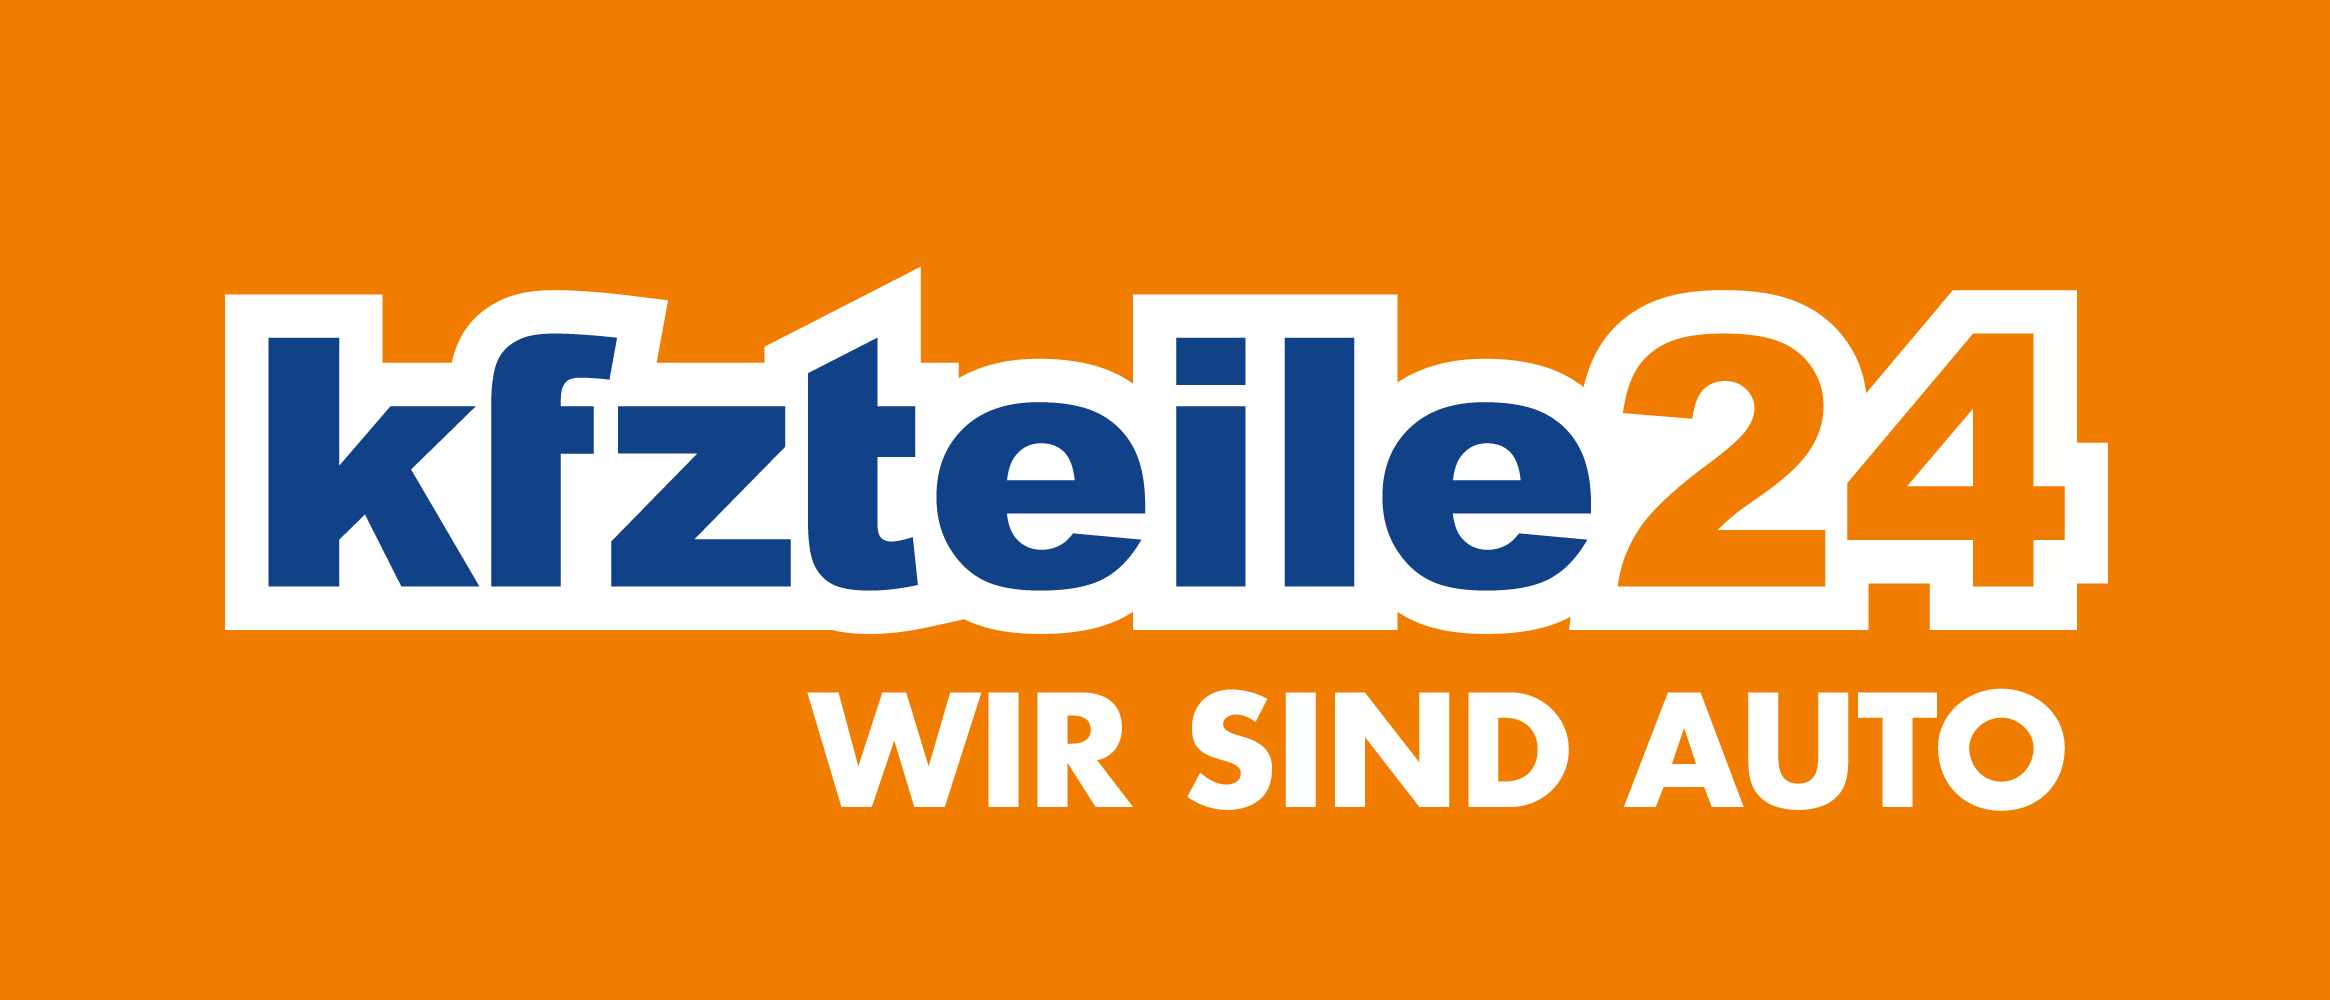 kfzteile24.at 